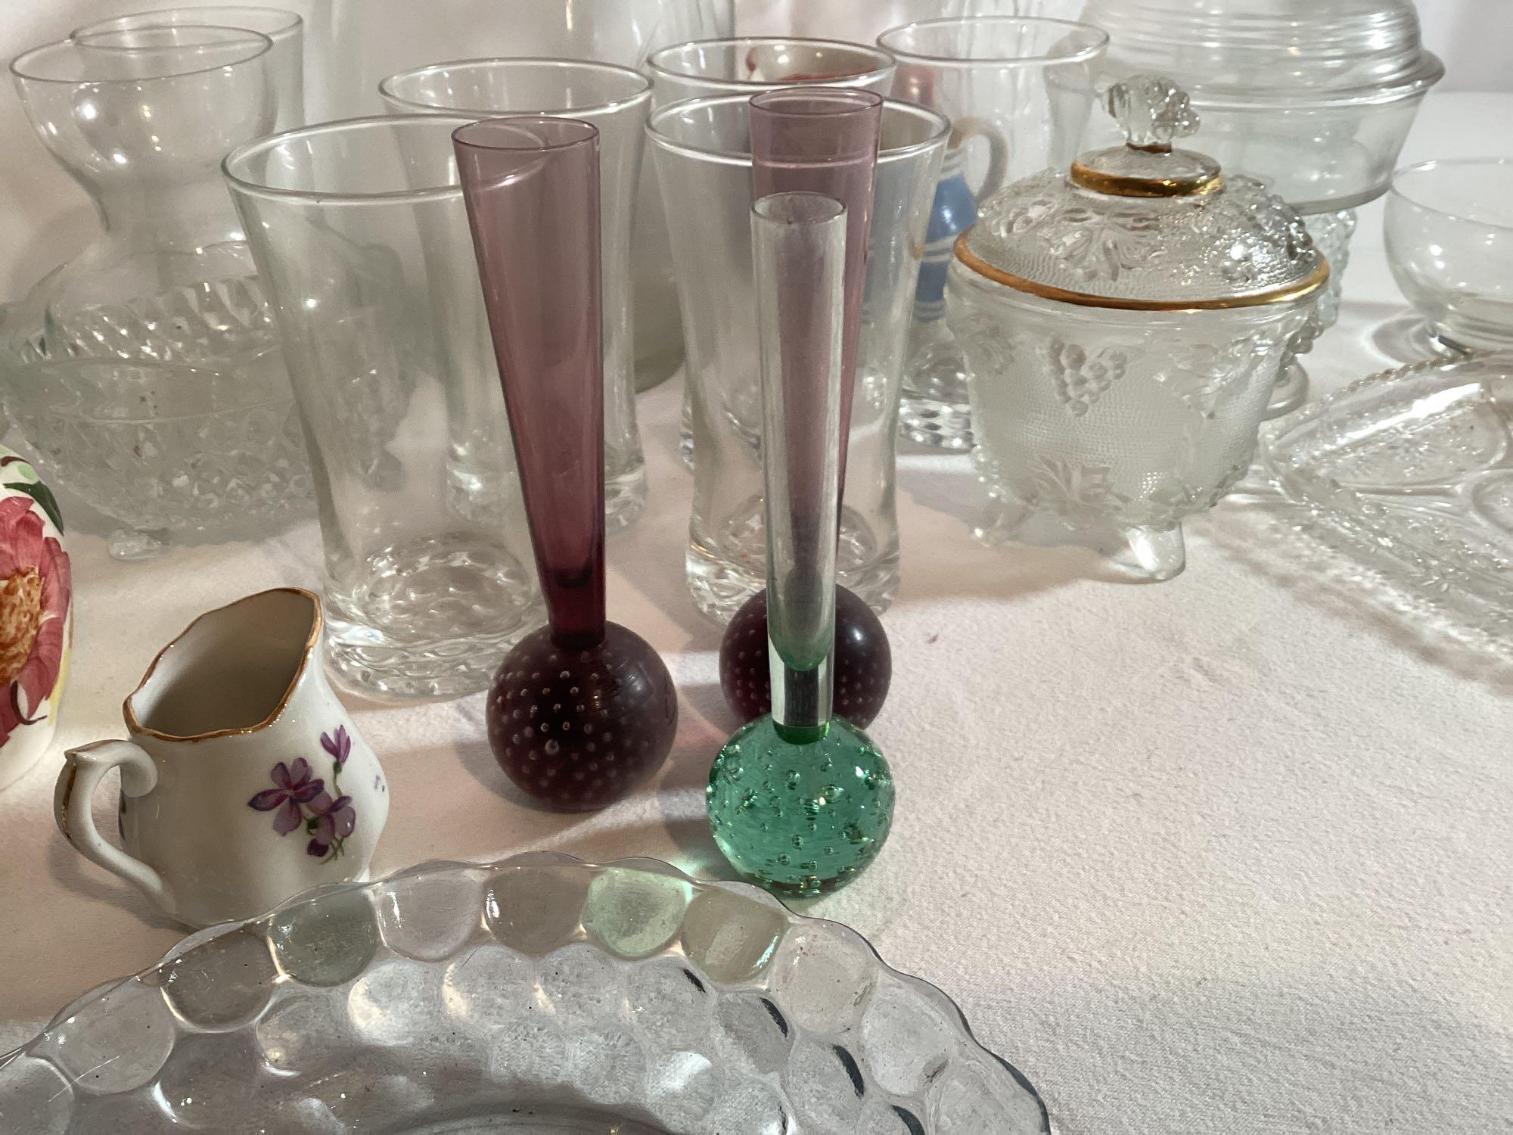 Image for Miscellaneous Glassware